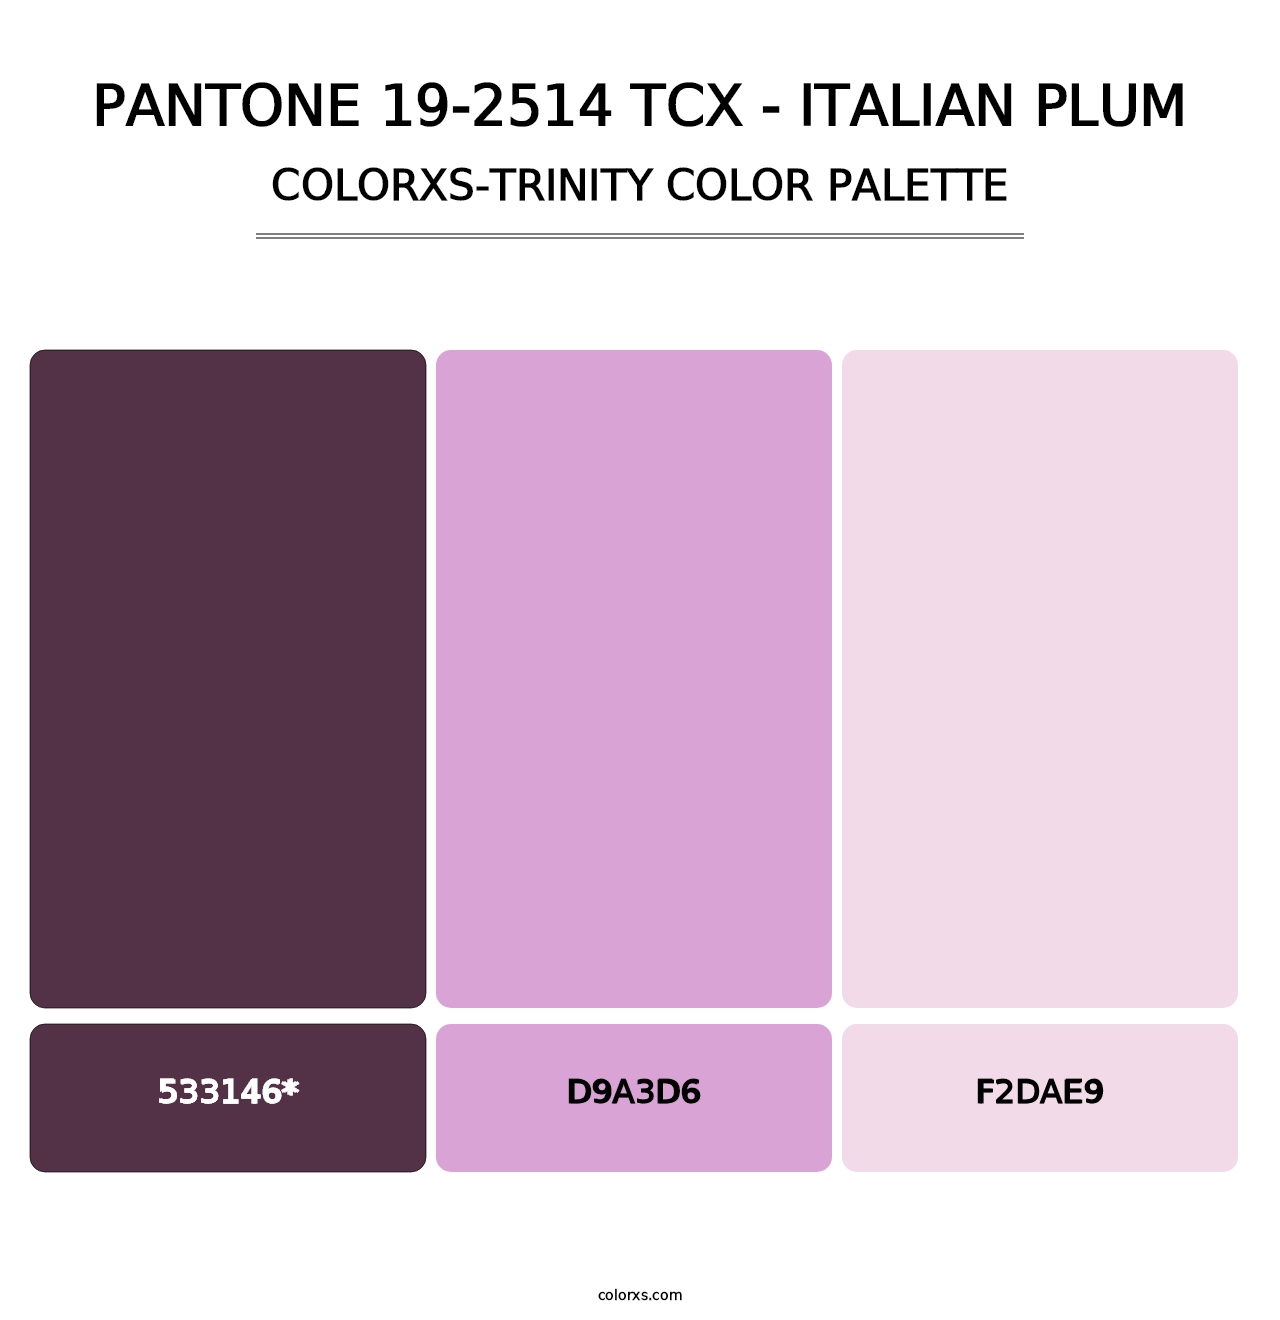 PANTONE 19-2514 TCX - Italian Plum - Colorxs Trinity Palette